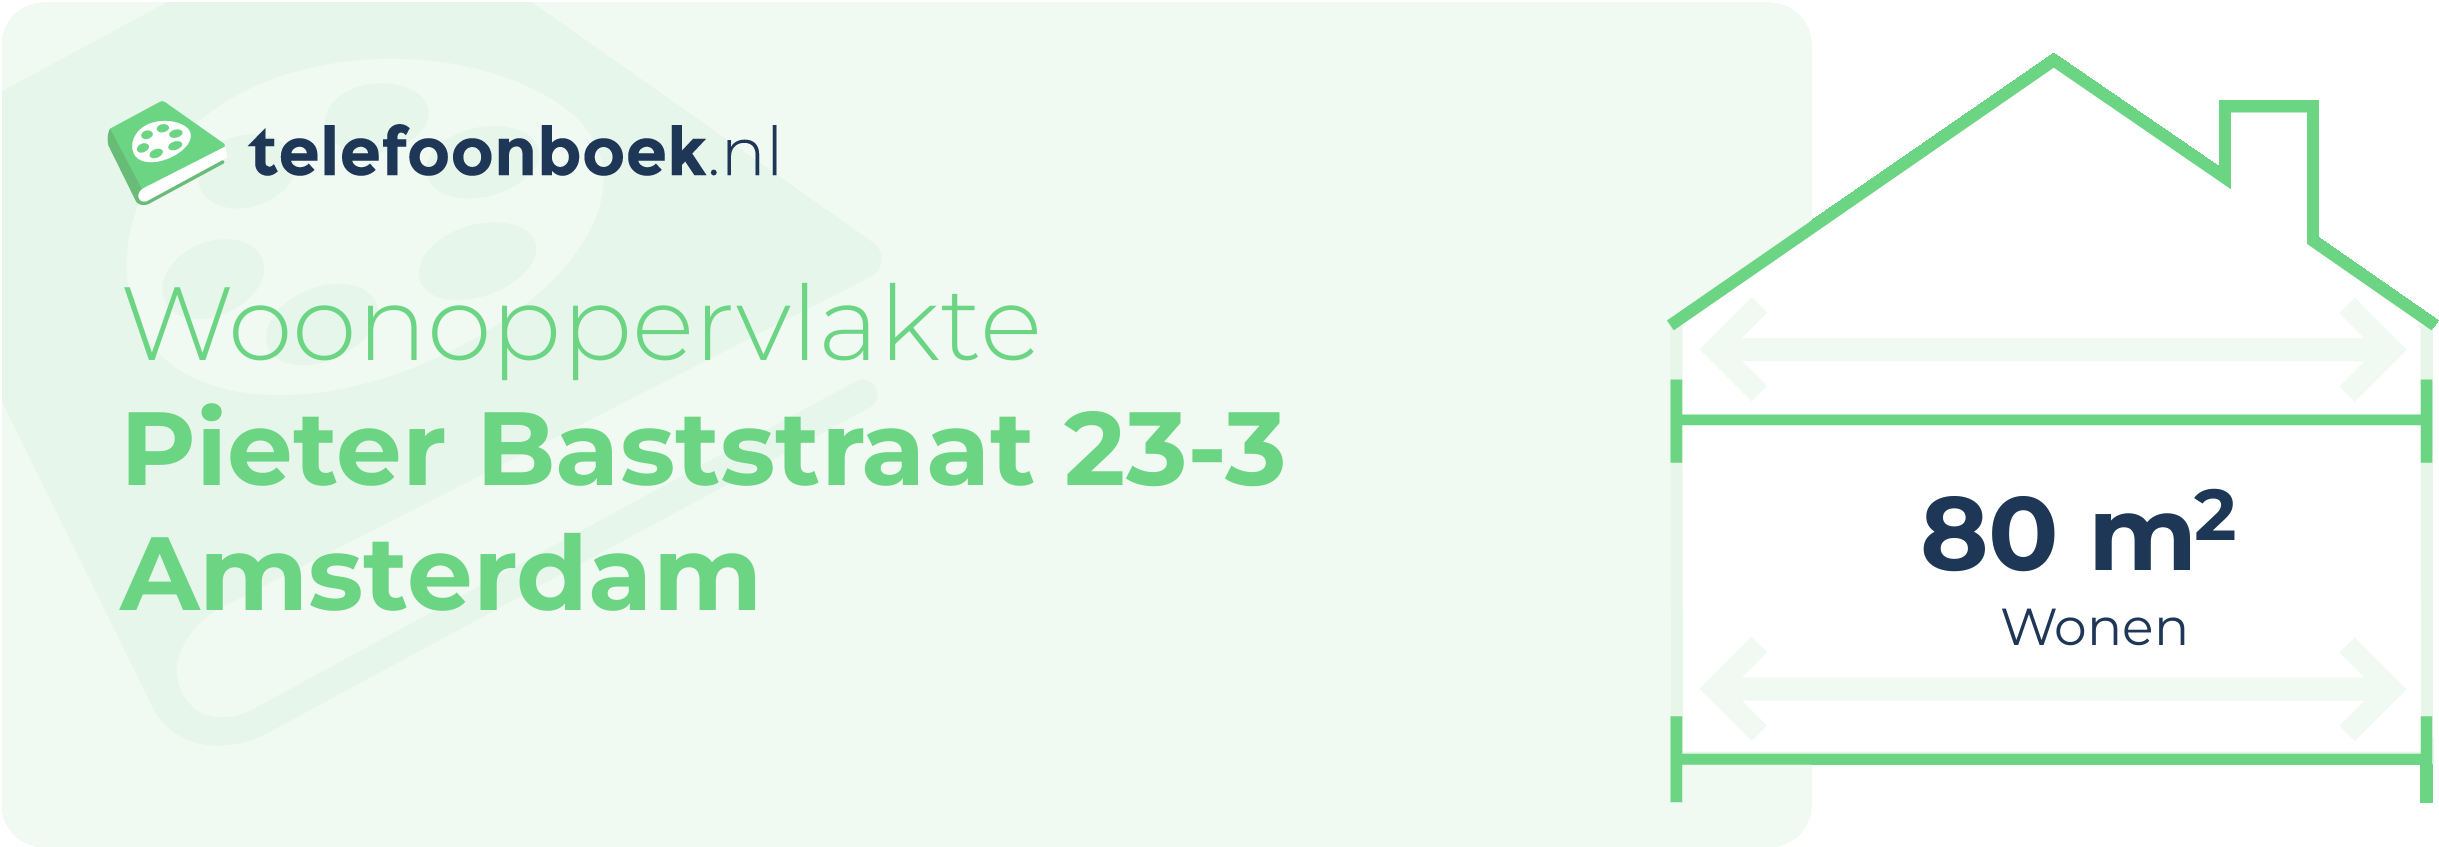 Woonoppervlakte Pieter Baststraat 23-3 Amsterdam